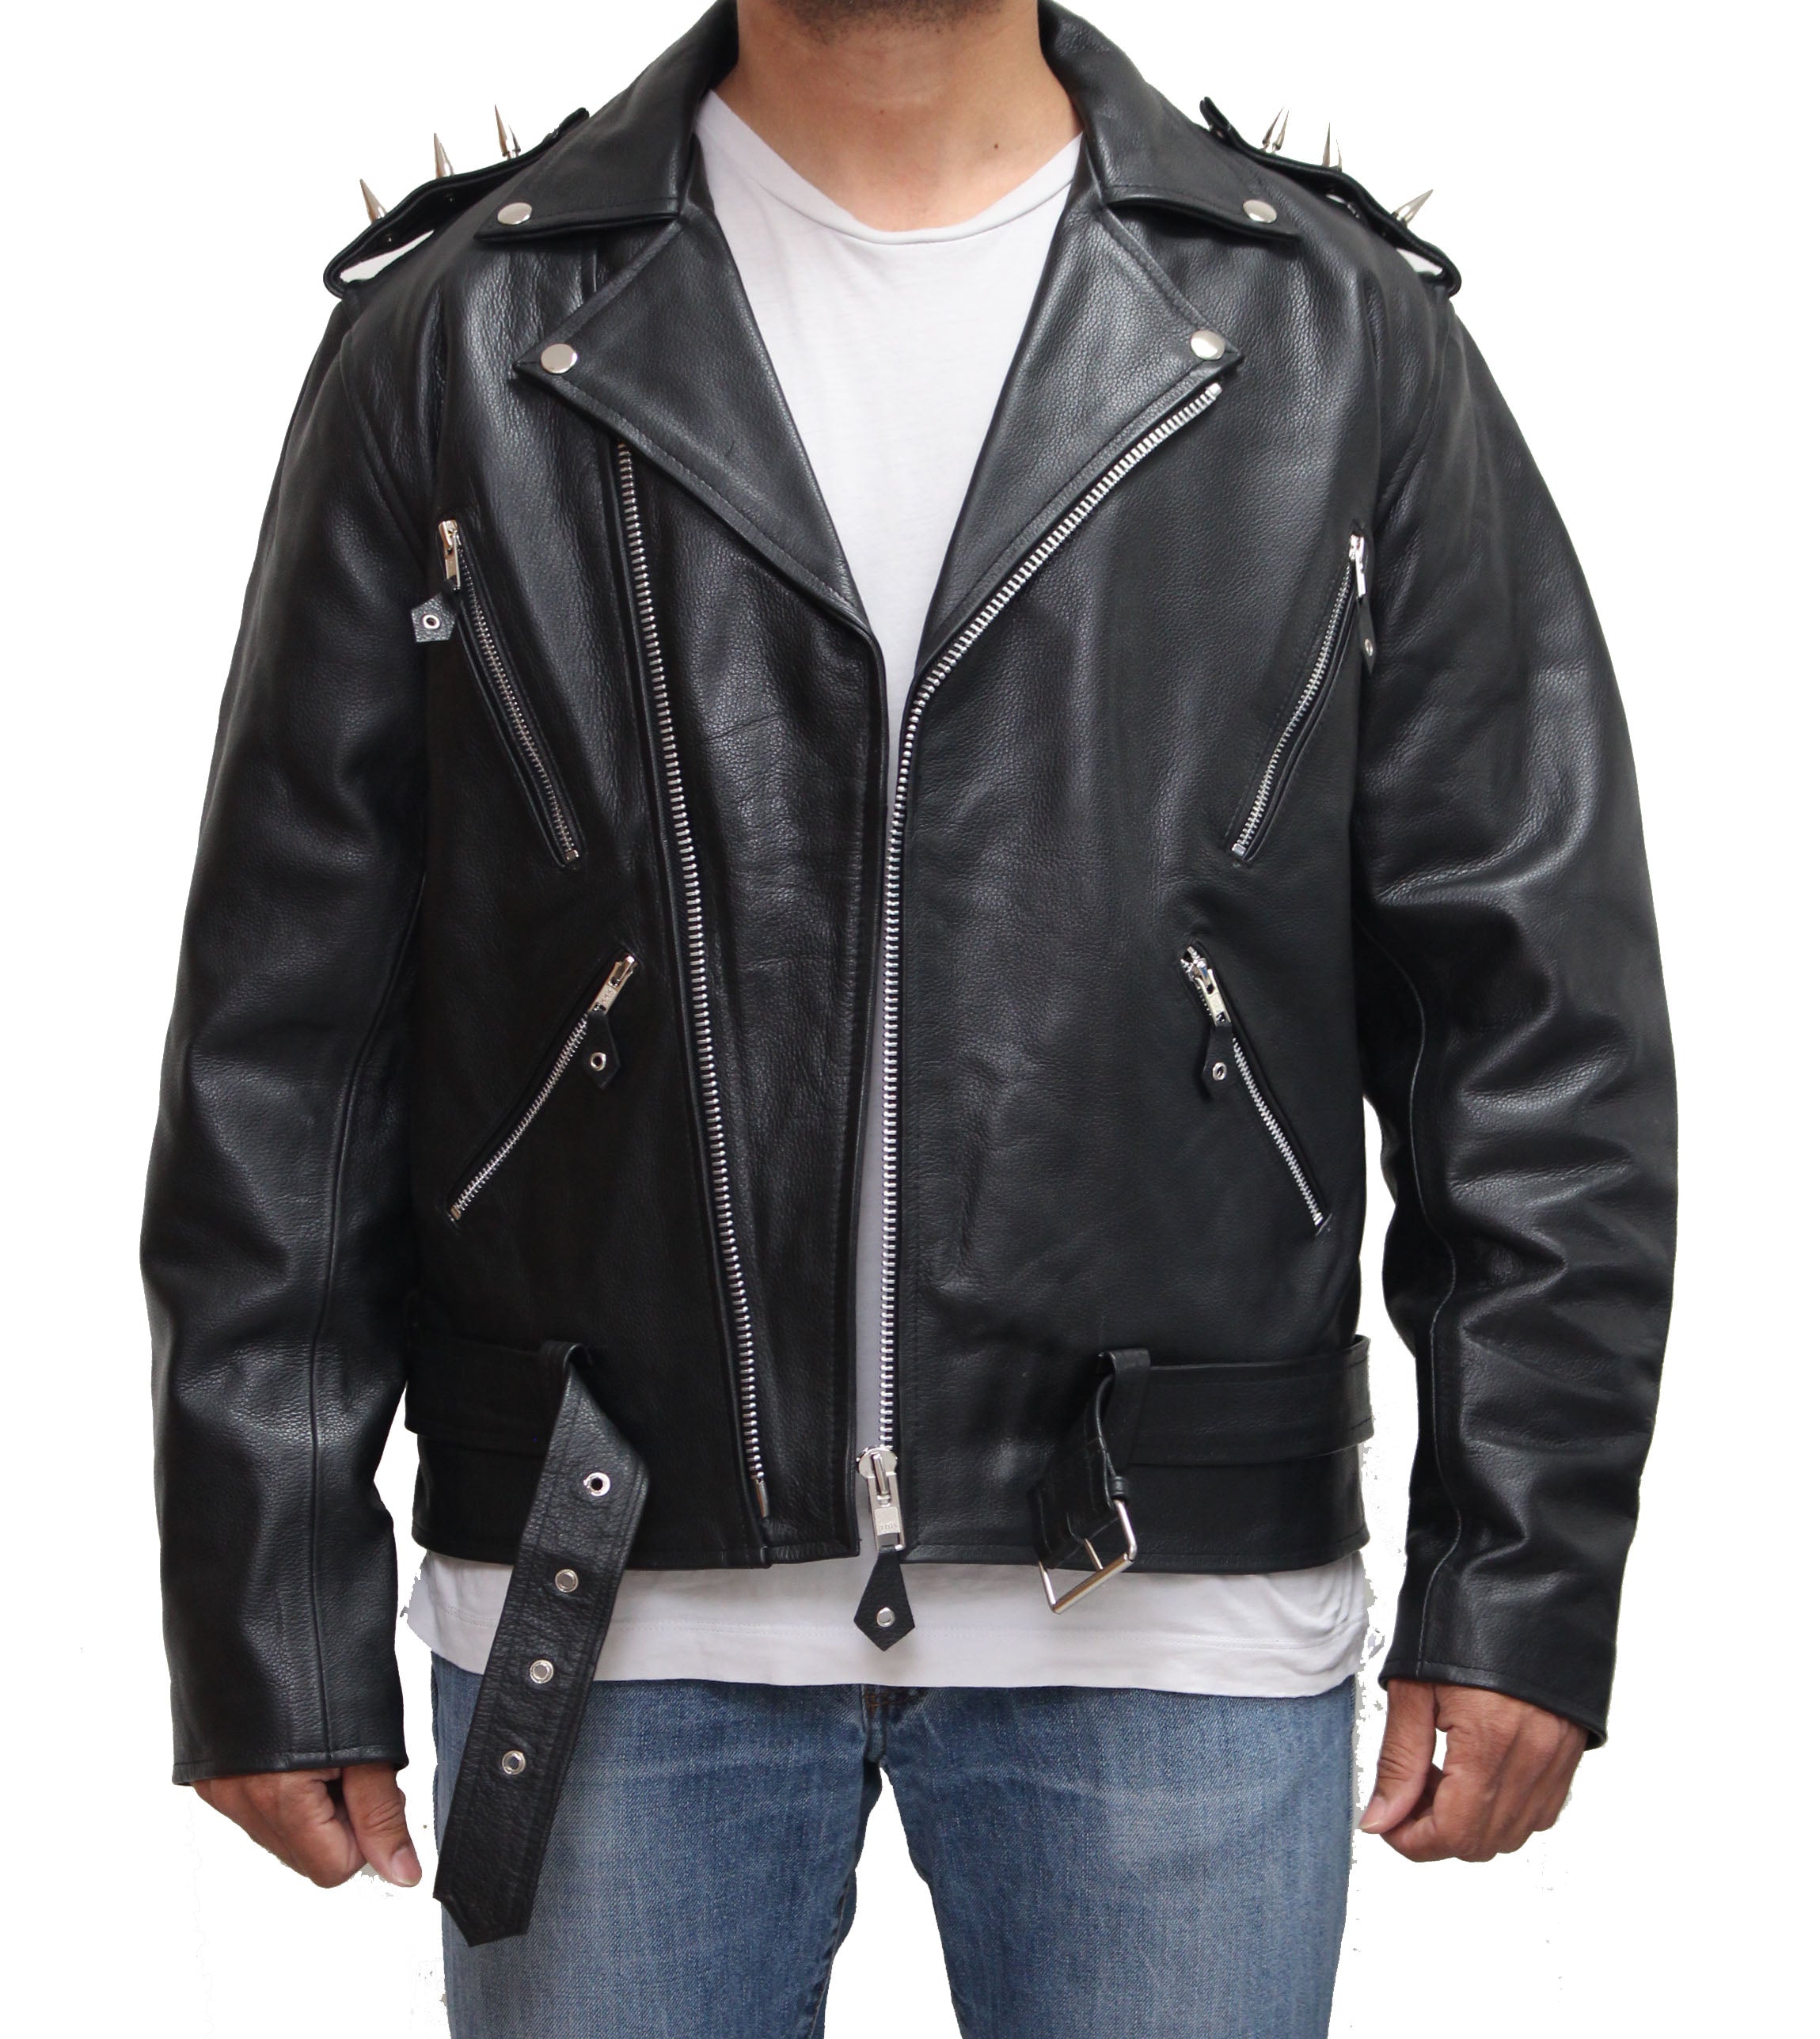 Black leather jacket on X: 